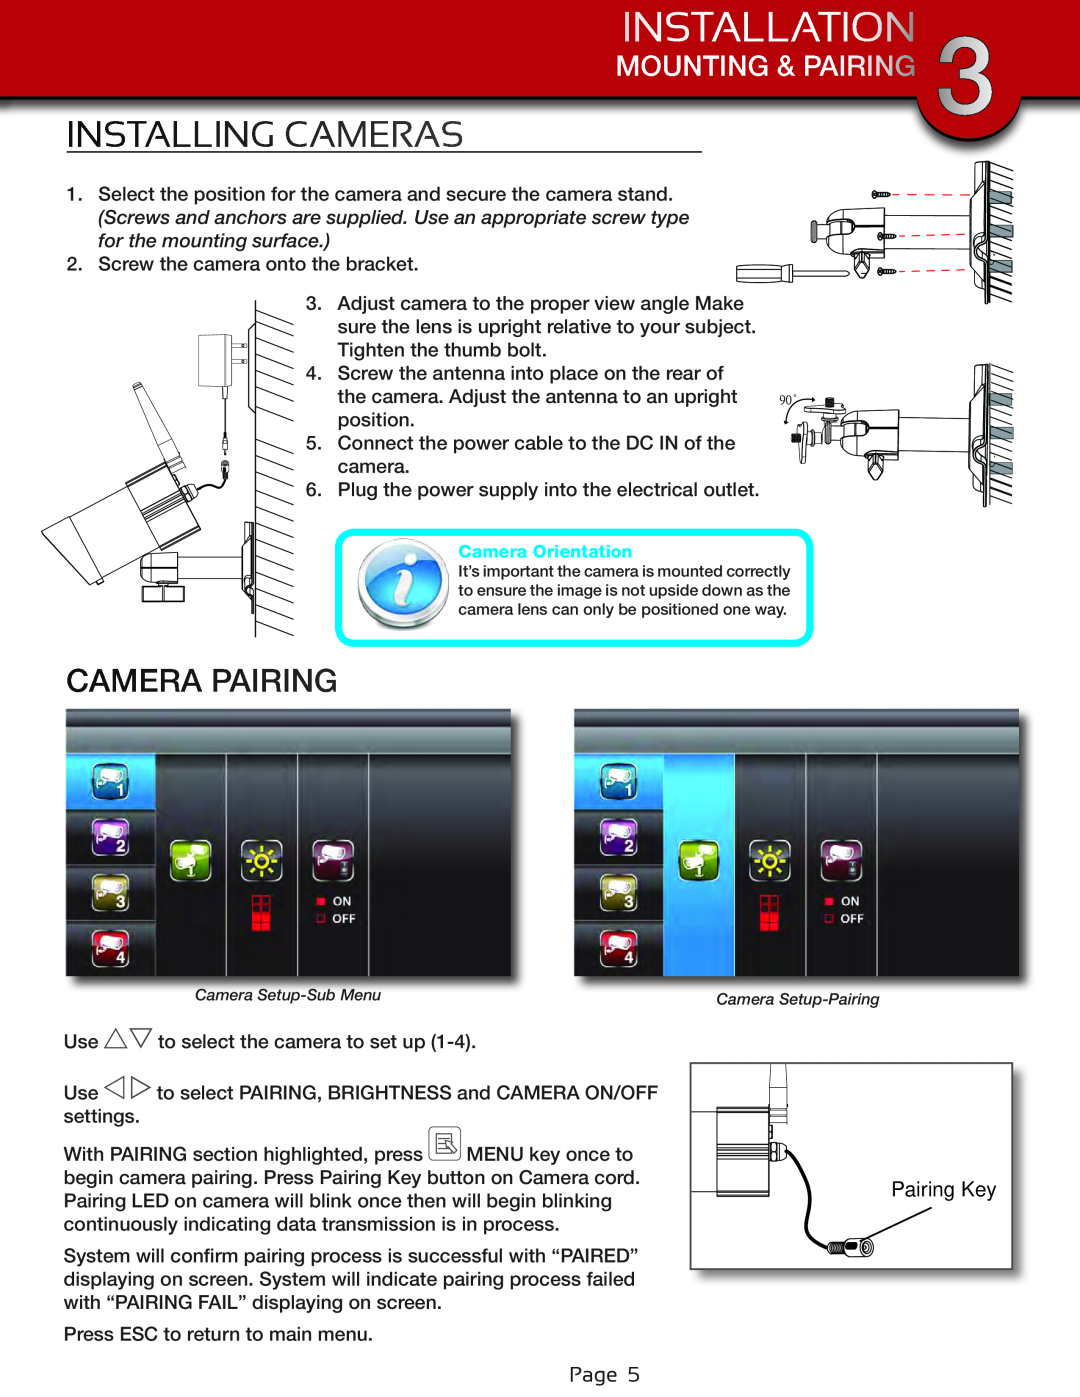 First Alert DWC-400 user manual Installation, Mounting & Pairing, Installing Cameras, Camera Pairing, Pairing Key 